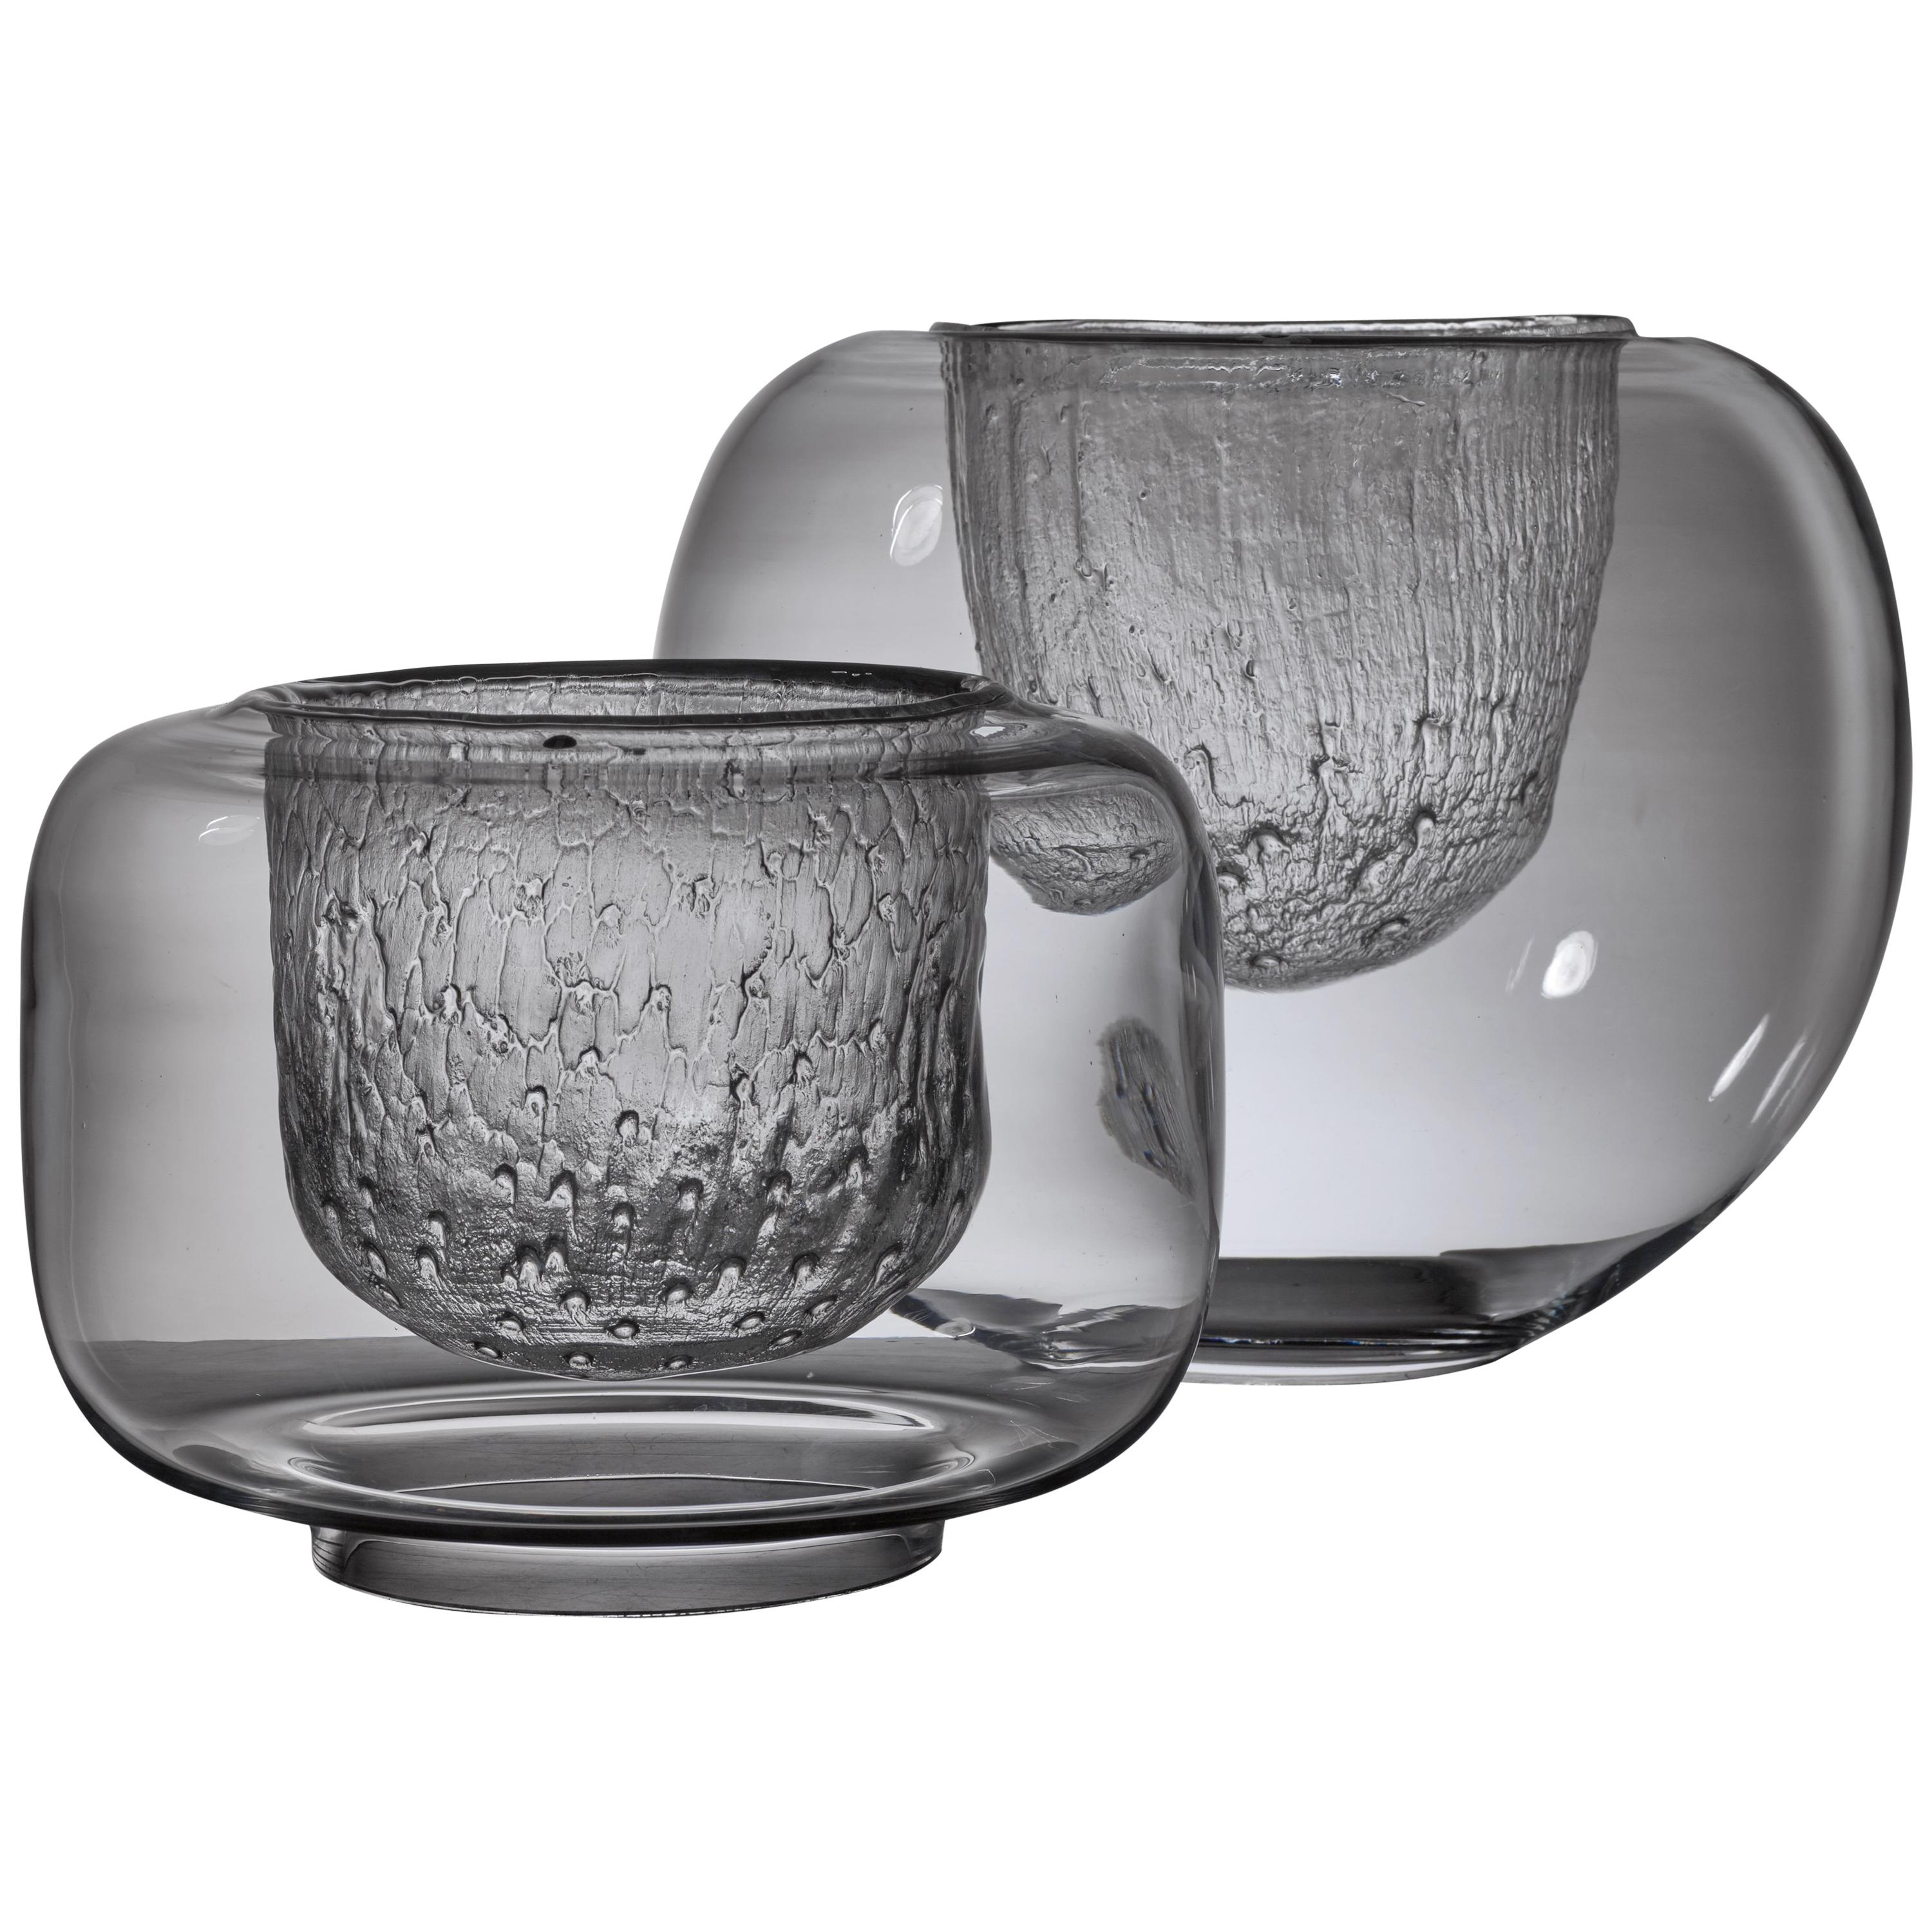 Pair of Timo Sarpaneva Glass Bowls for Iittala, Finland, 1960s For Sale